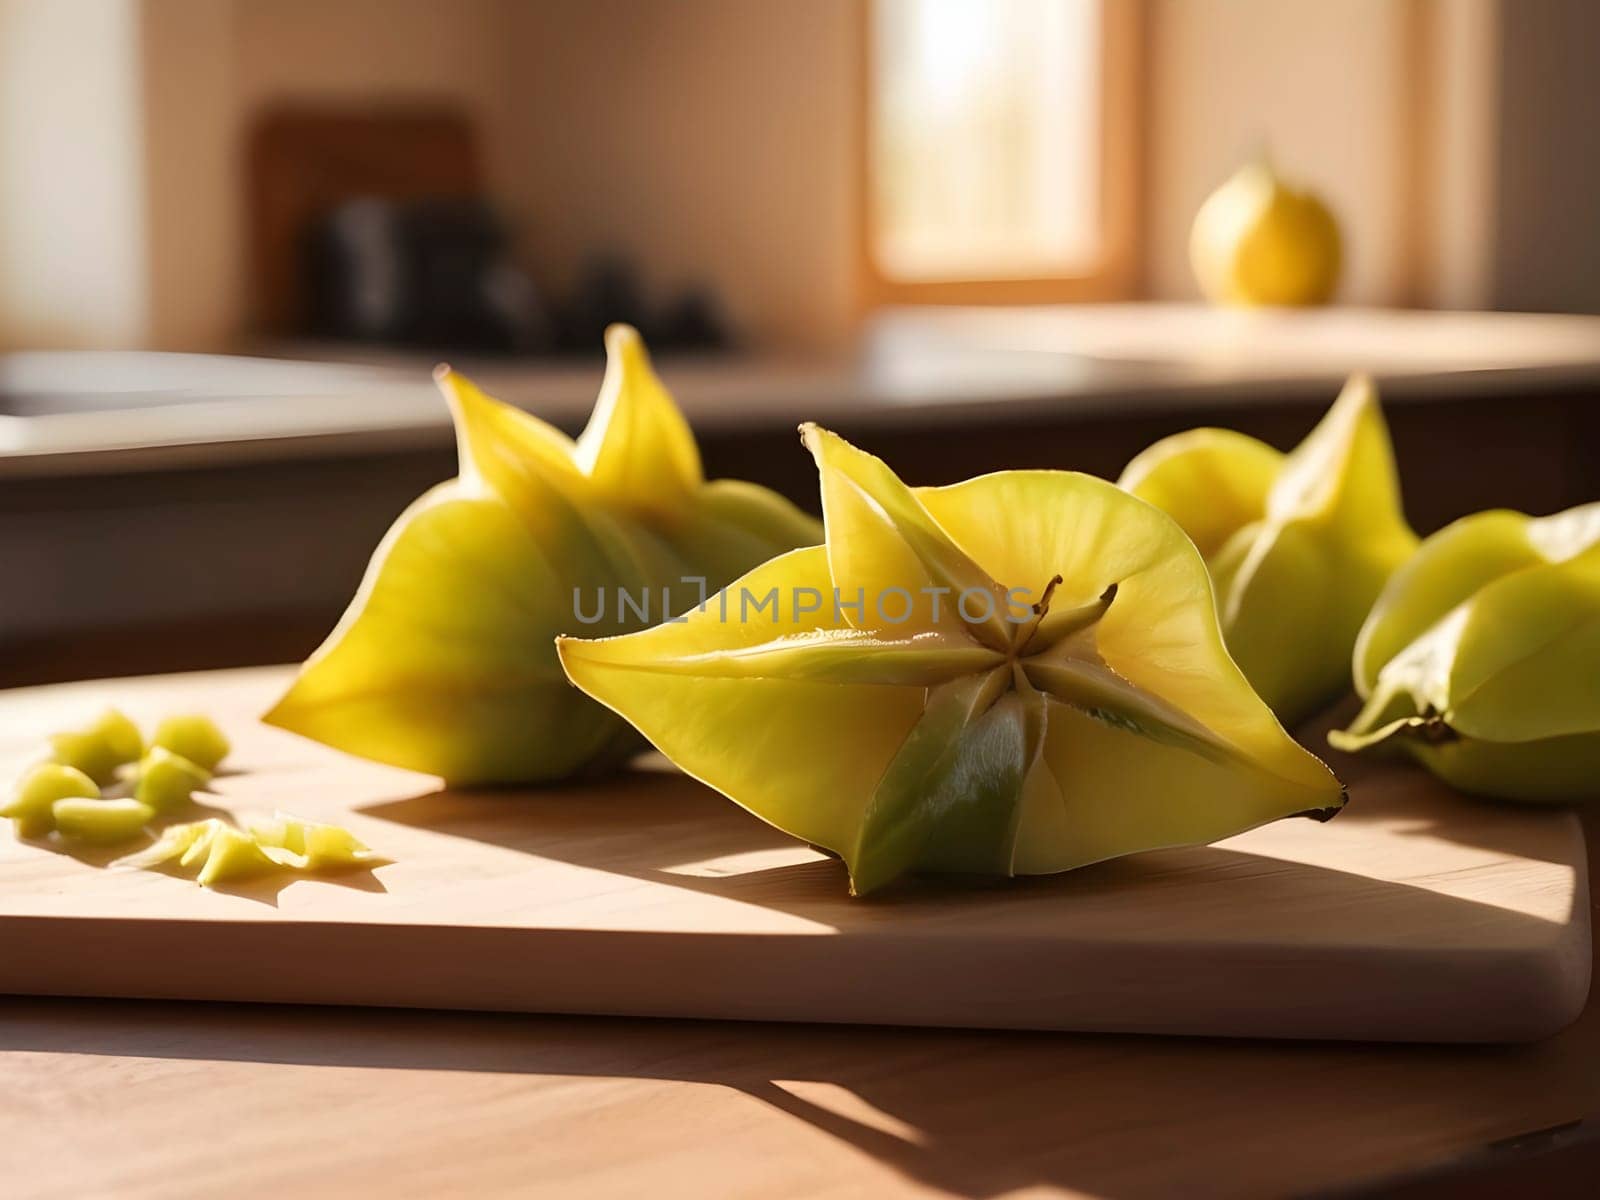 Golden Hour Delight: Star Fruit on a Wooden Board in a Sunlit Kitchen Scene.